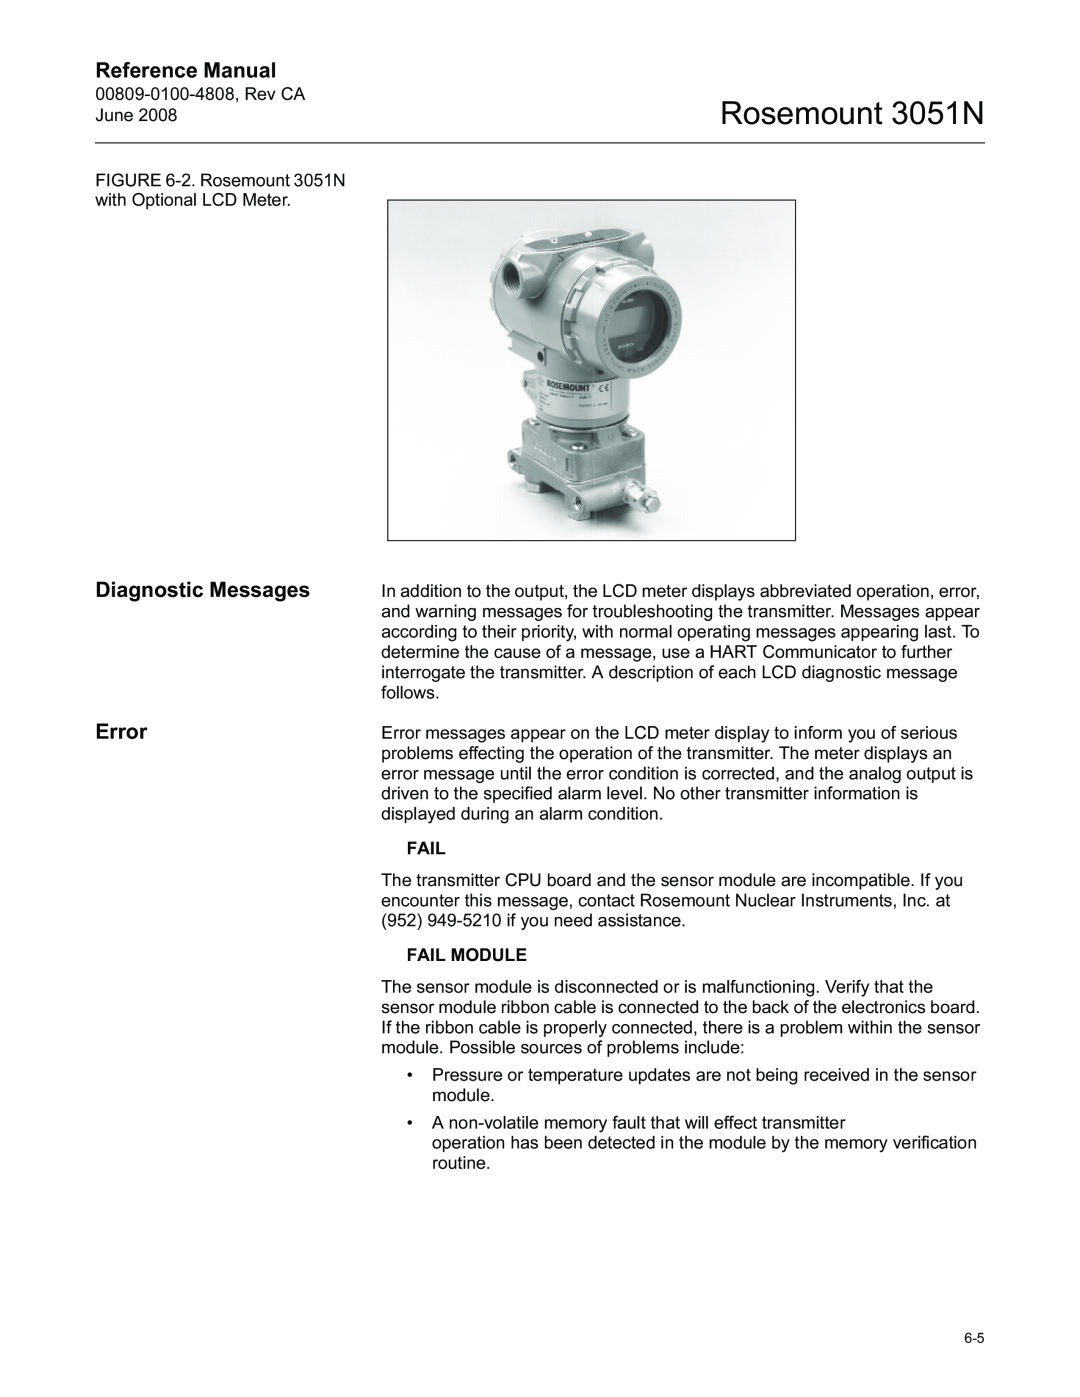 Emerson manual Diagnostic Messages, Error, Rosemount 3051N, Reference Manual 